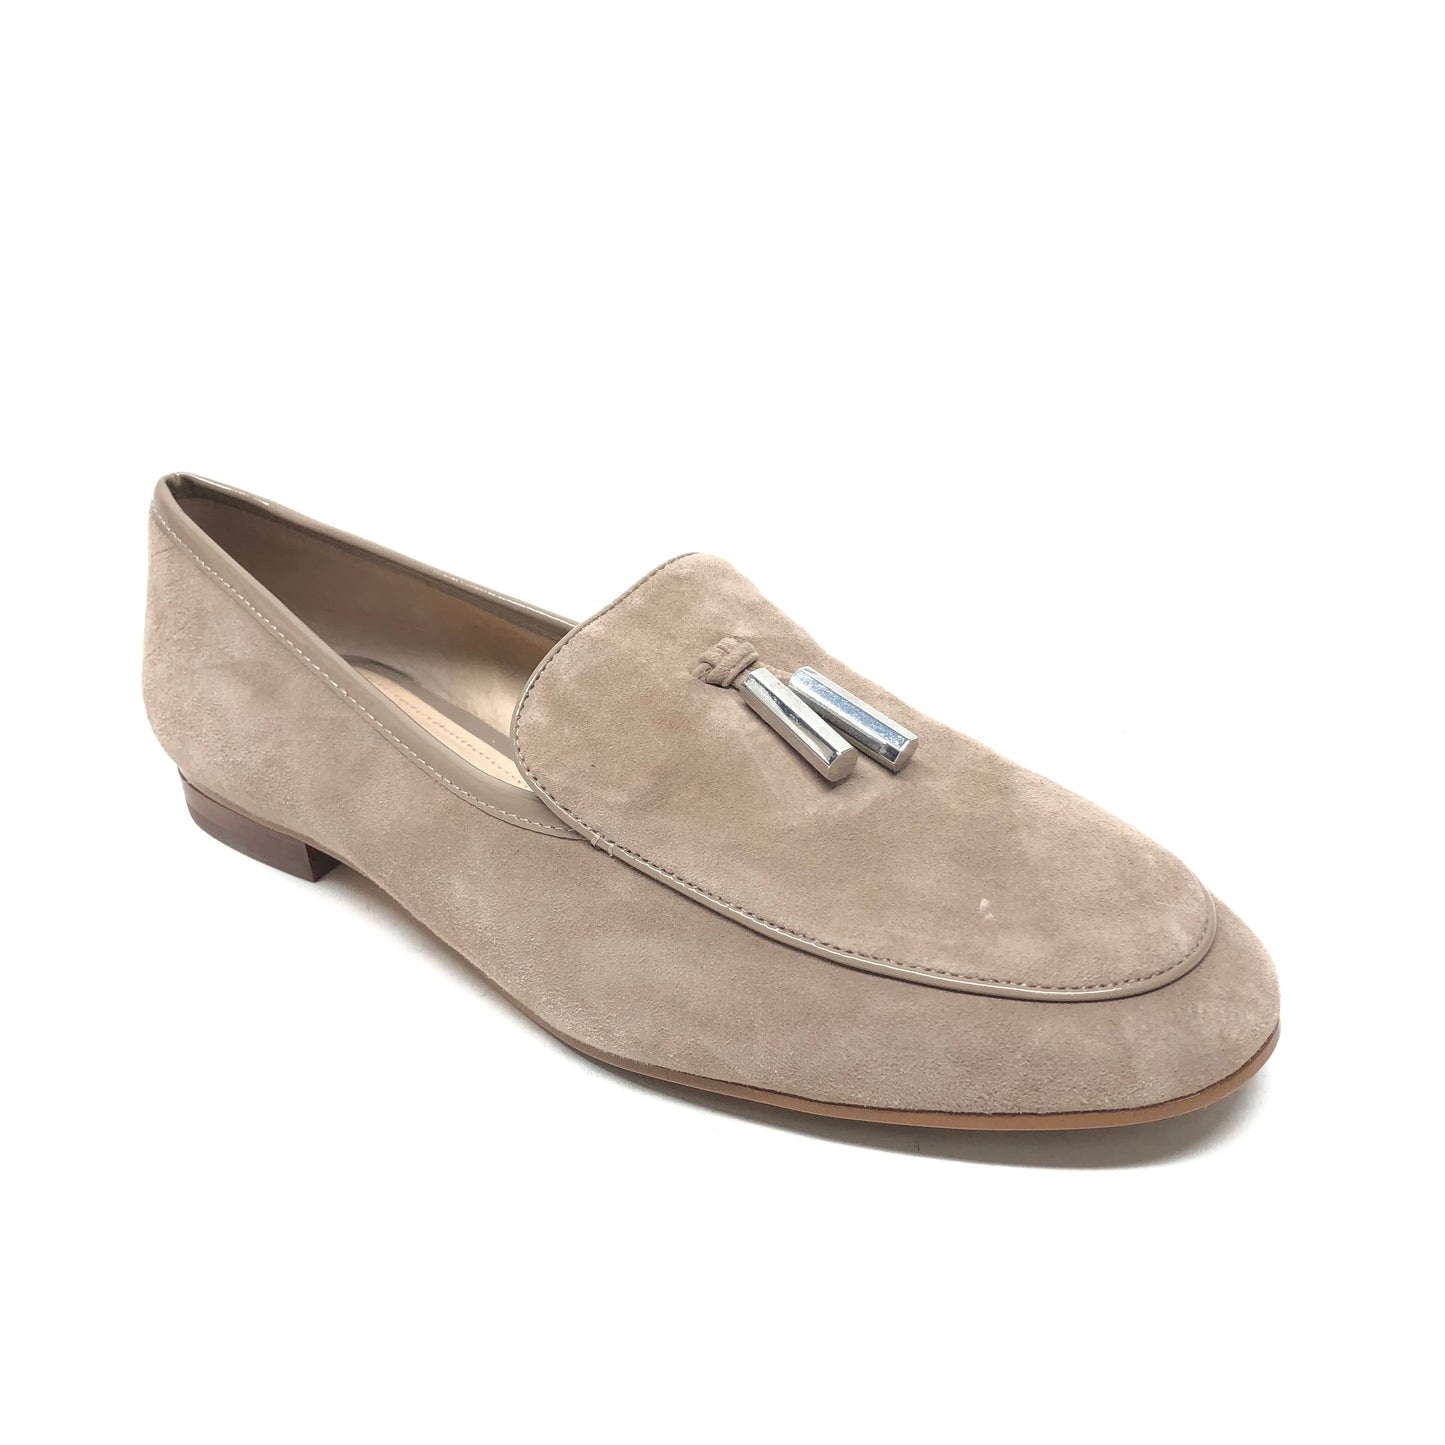 Taupe Shoes Flats Louise Et Cie, Size 8